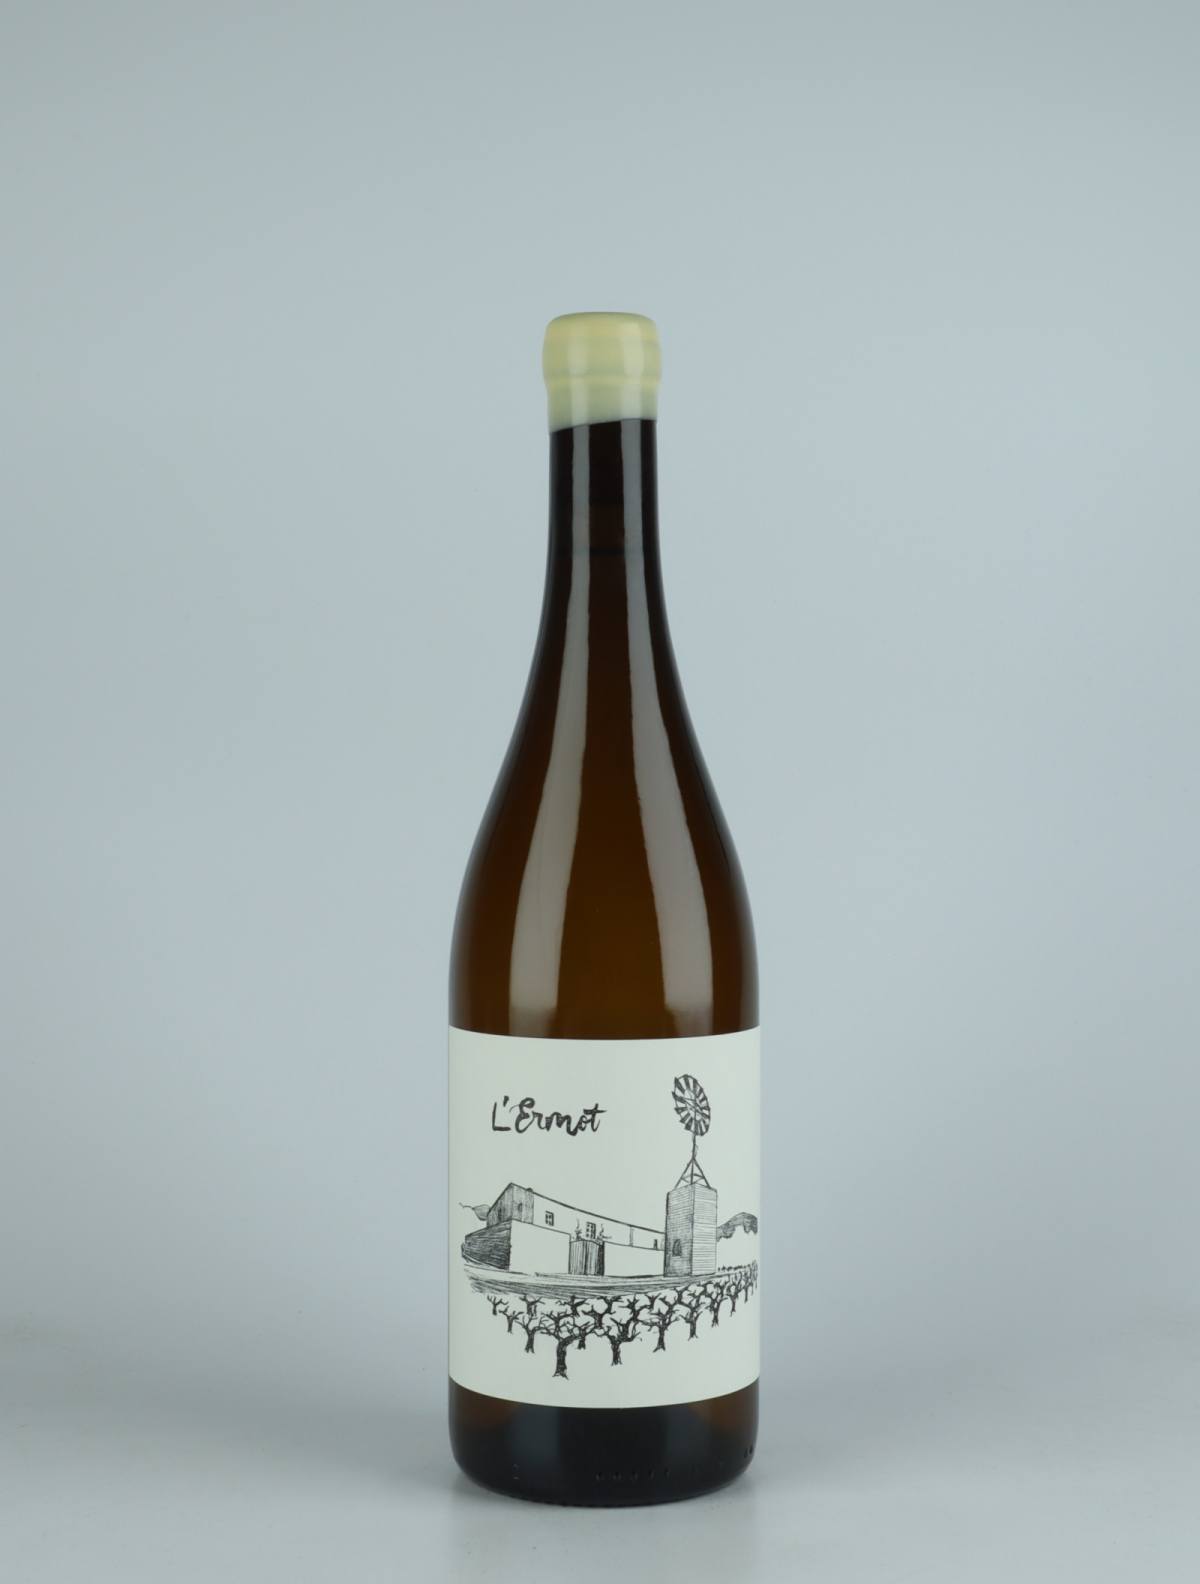 A bottle 2021 L'Ermot White wine from Celler la Salada, Penedès in Spain